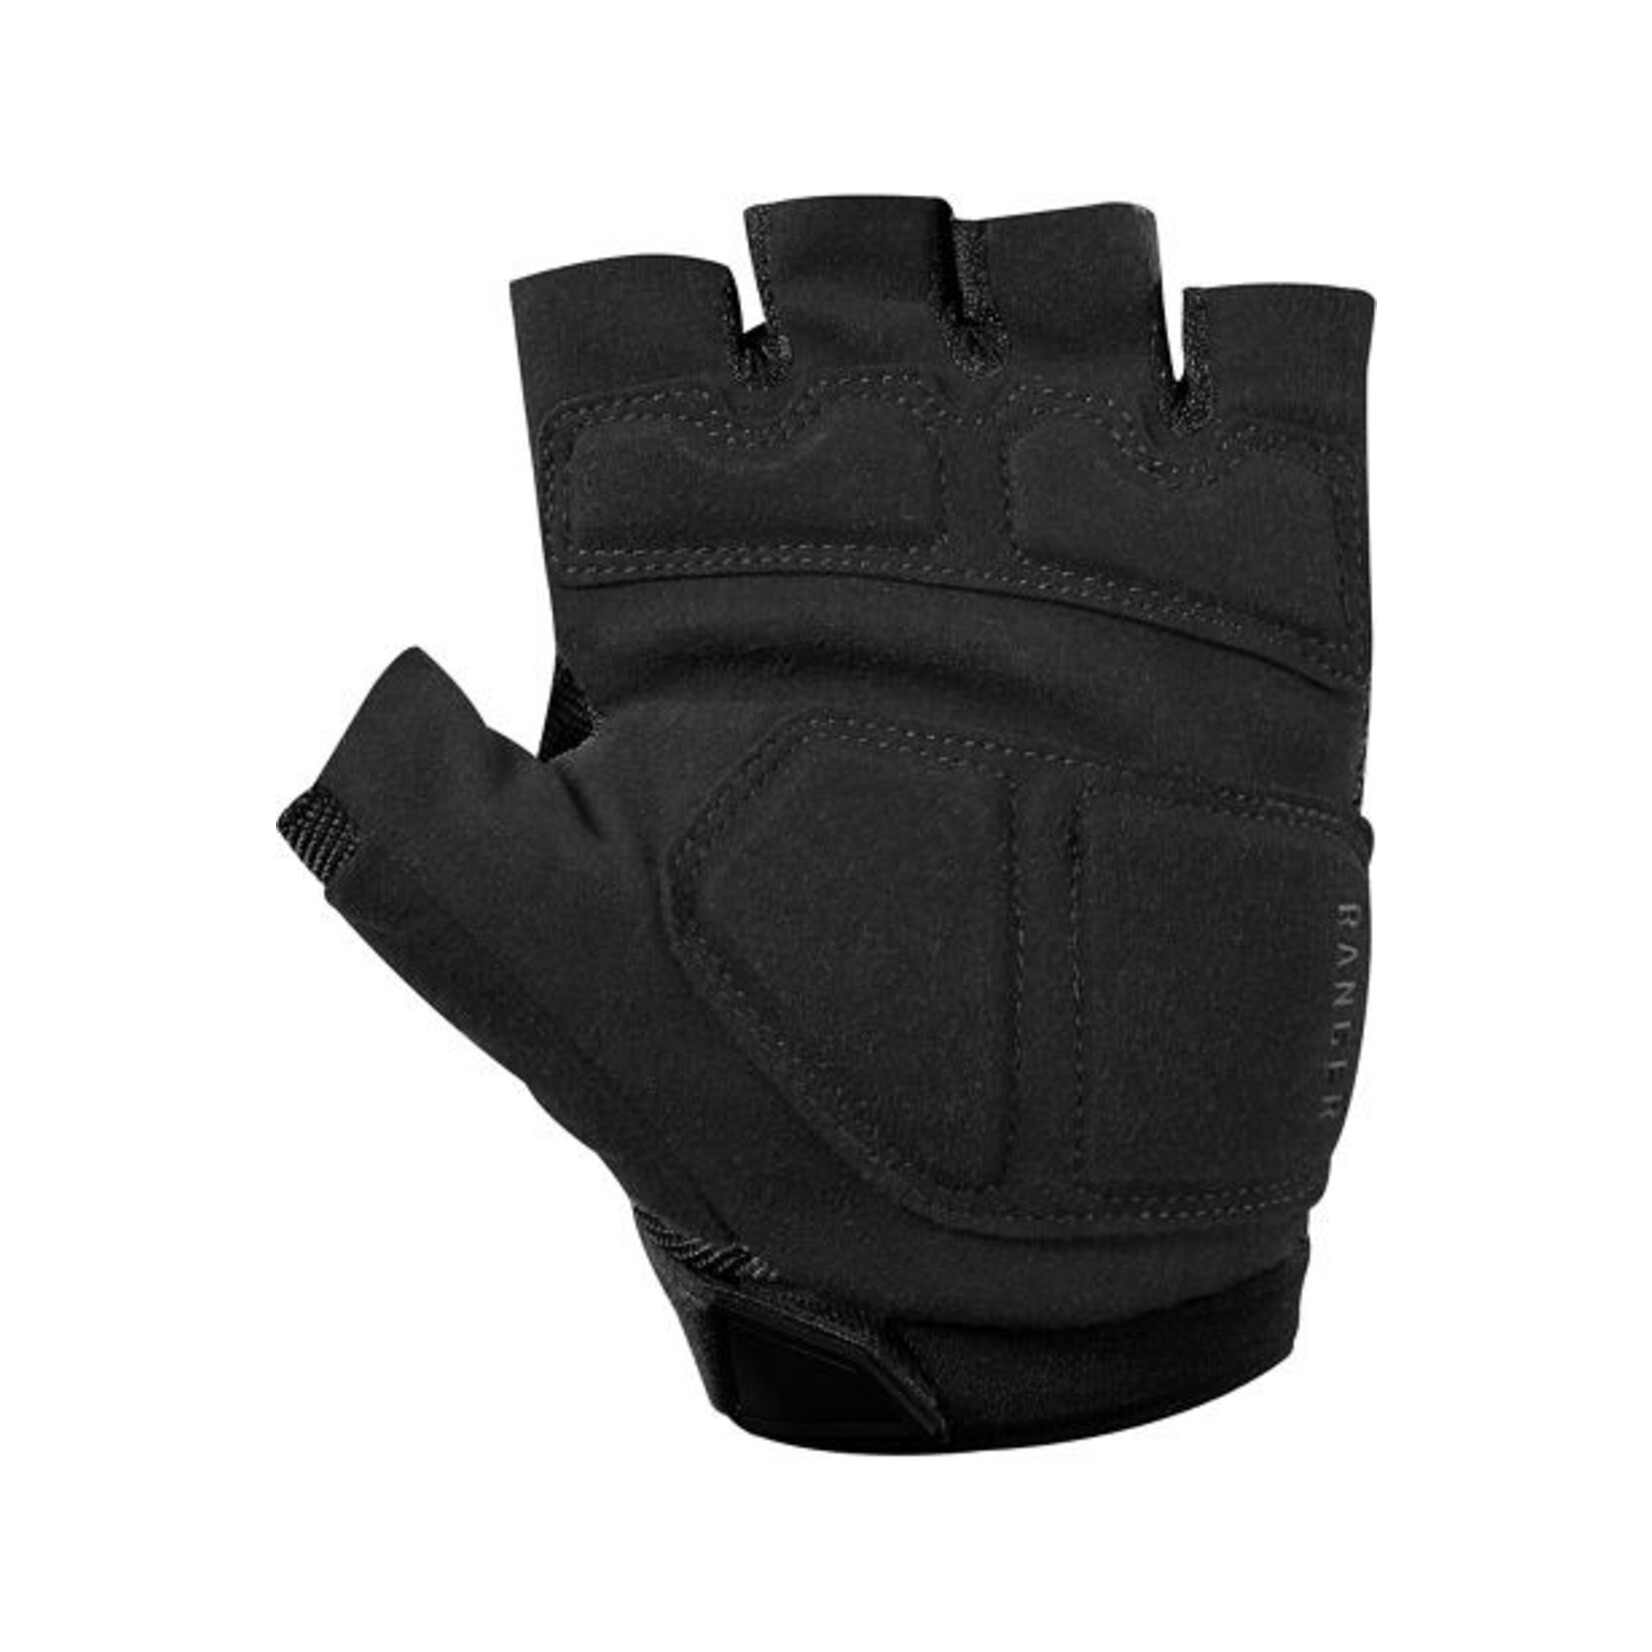 FOX CANADA Ranger Gel Short Glove